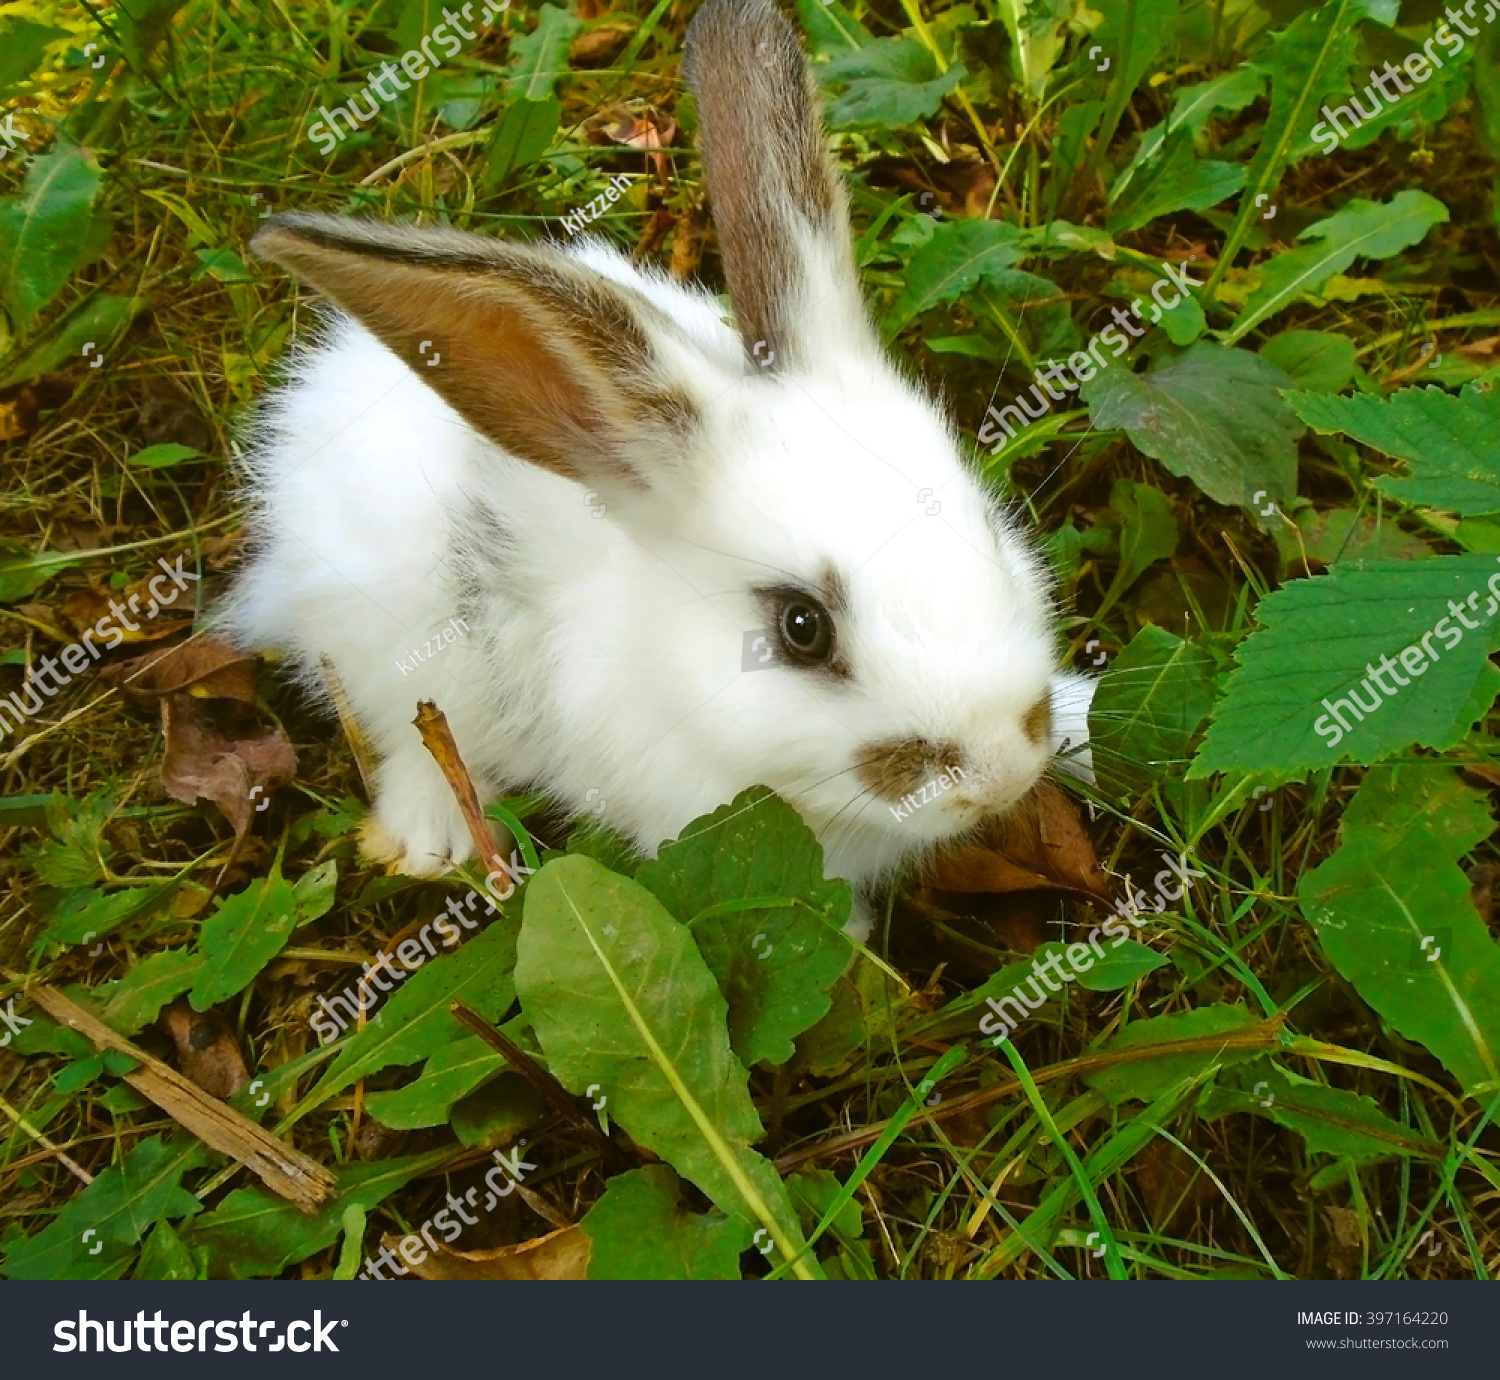 Baby Bunny Grass Stock Photo 397164220 | Shutterstock